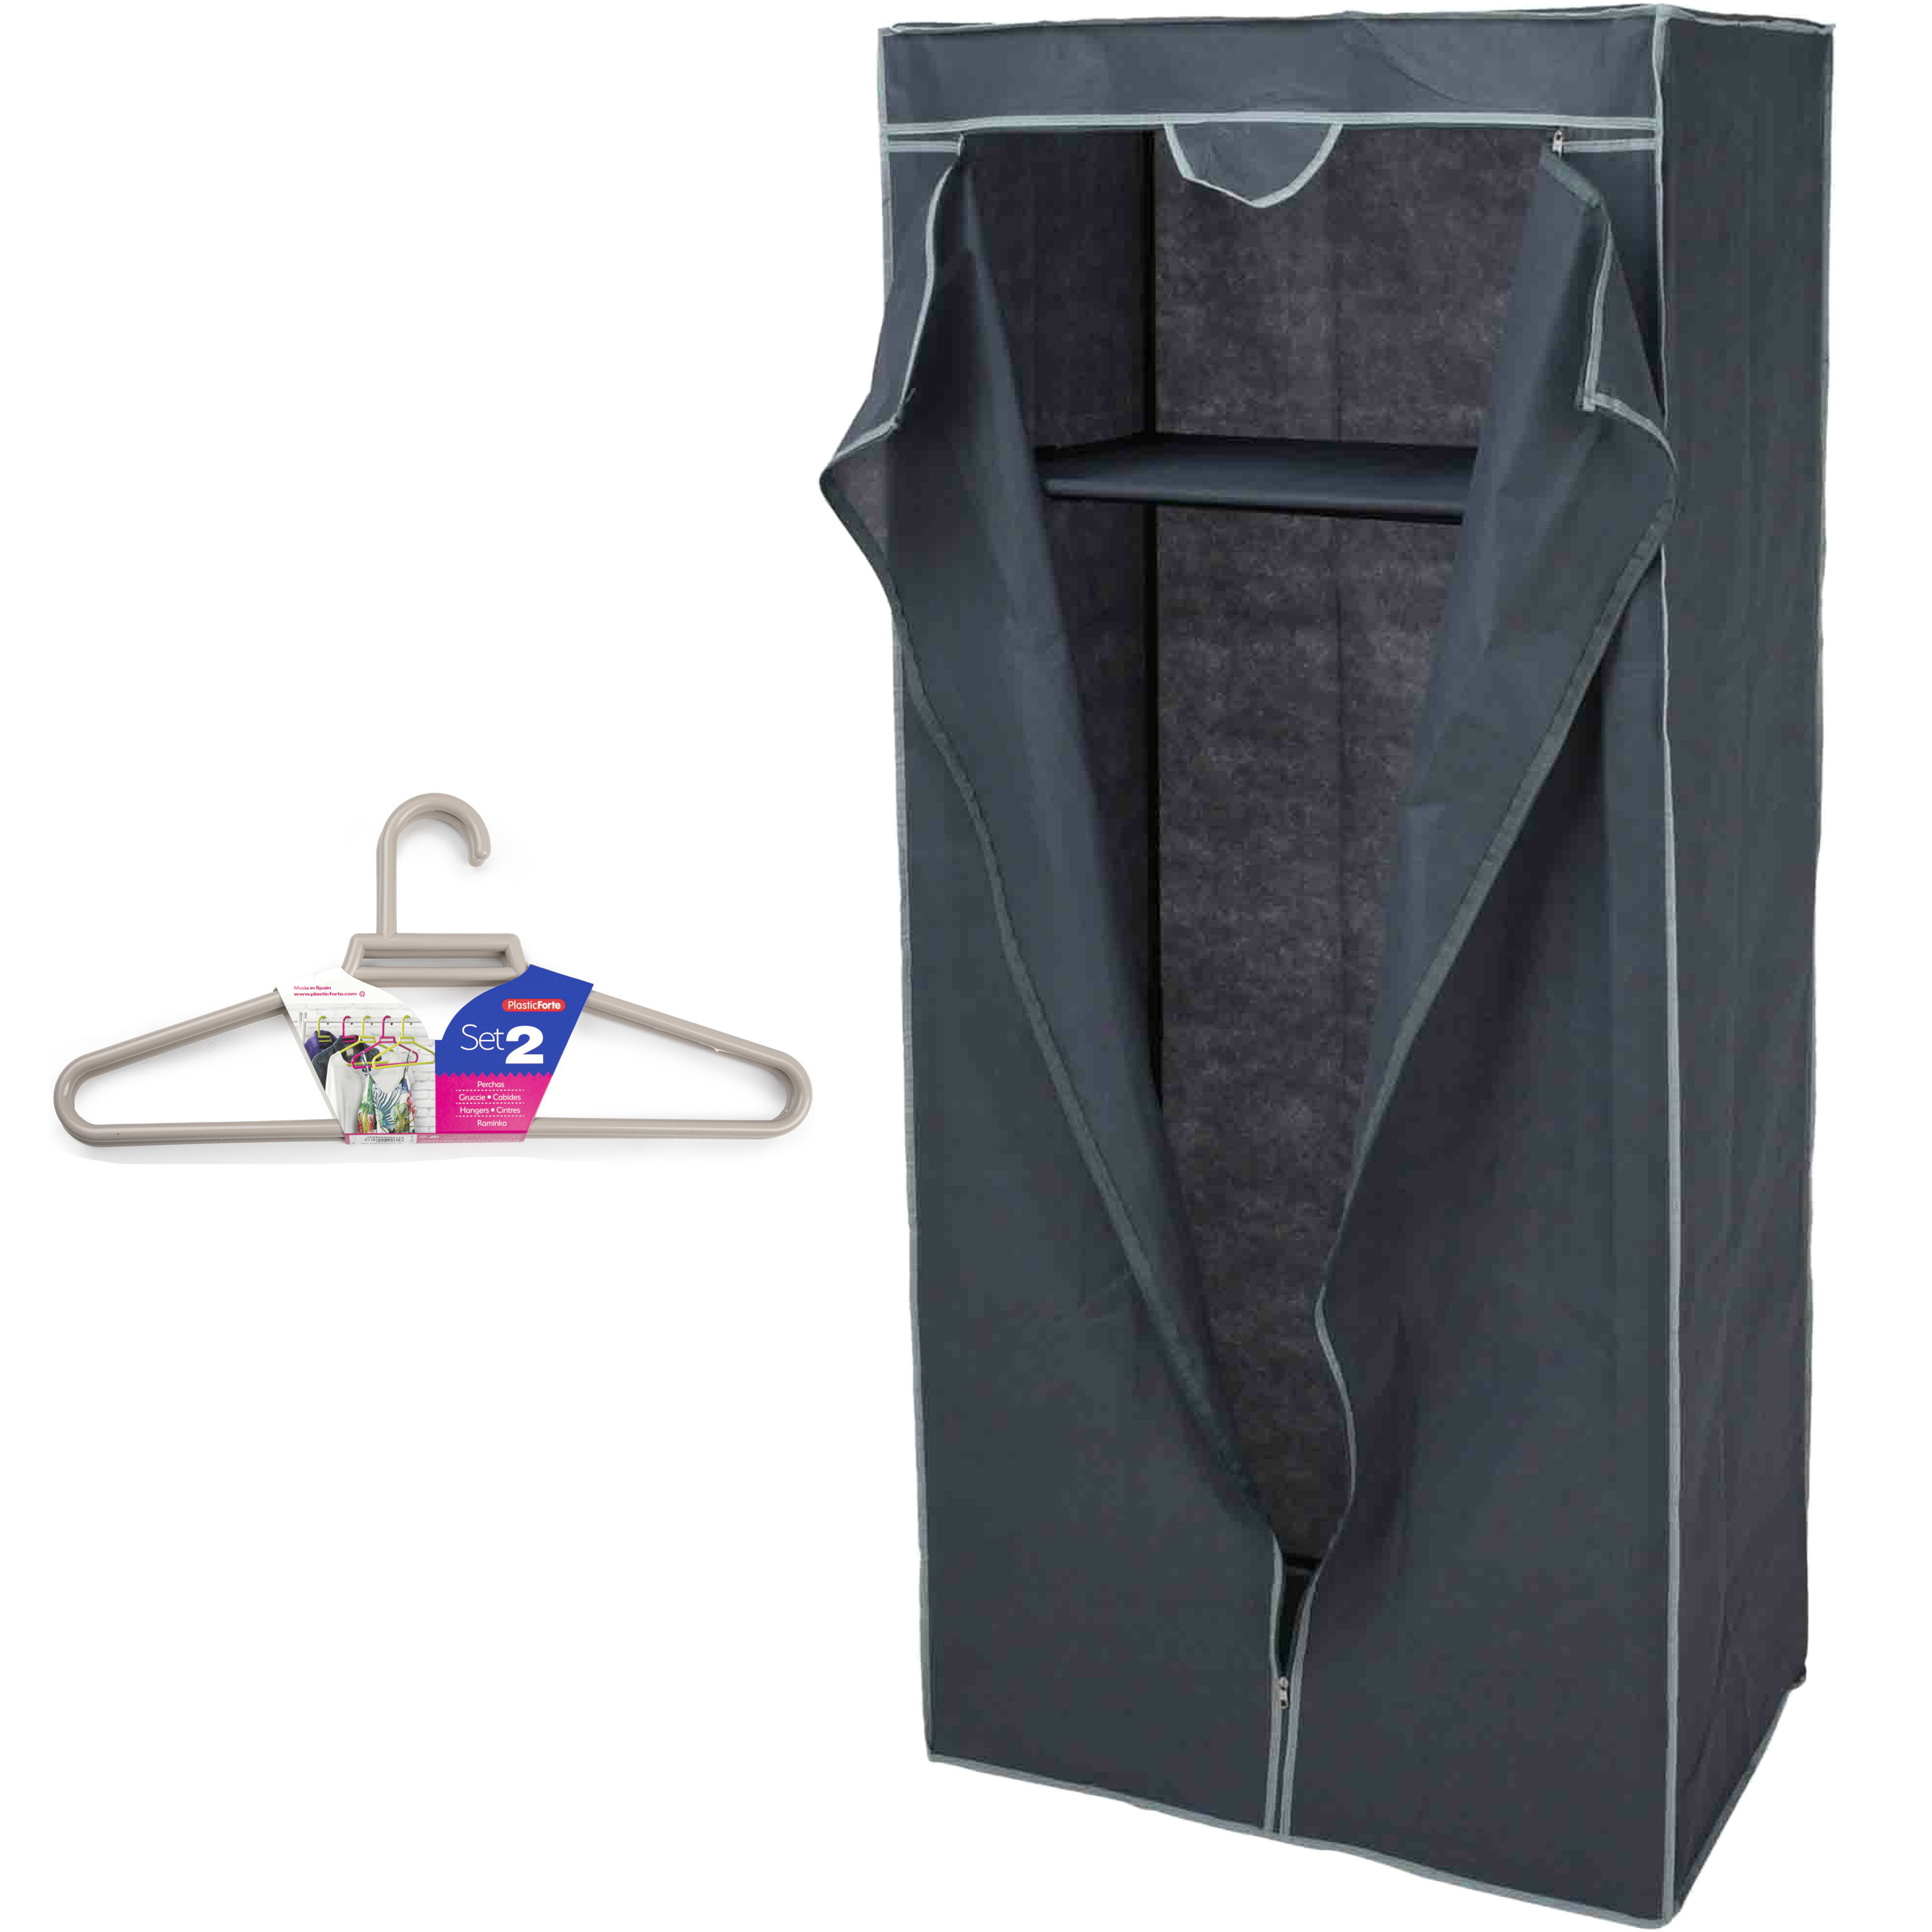 Mobiele opvouwbare kledingkast grijs 75 x 160 cm met 10x kledinghangers taupe